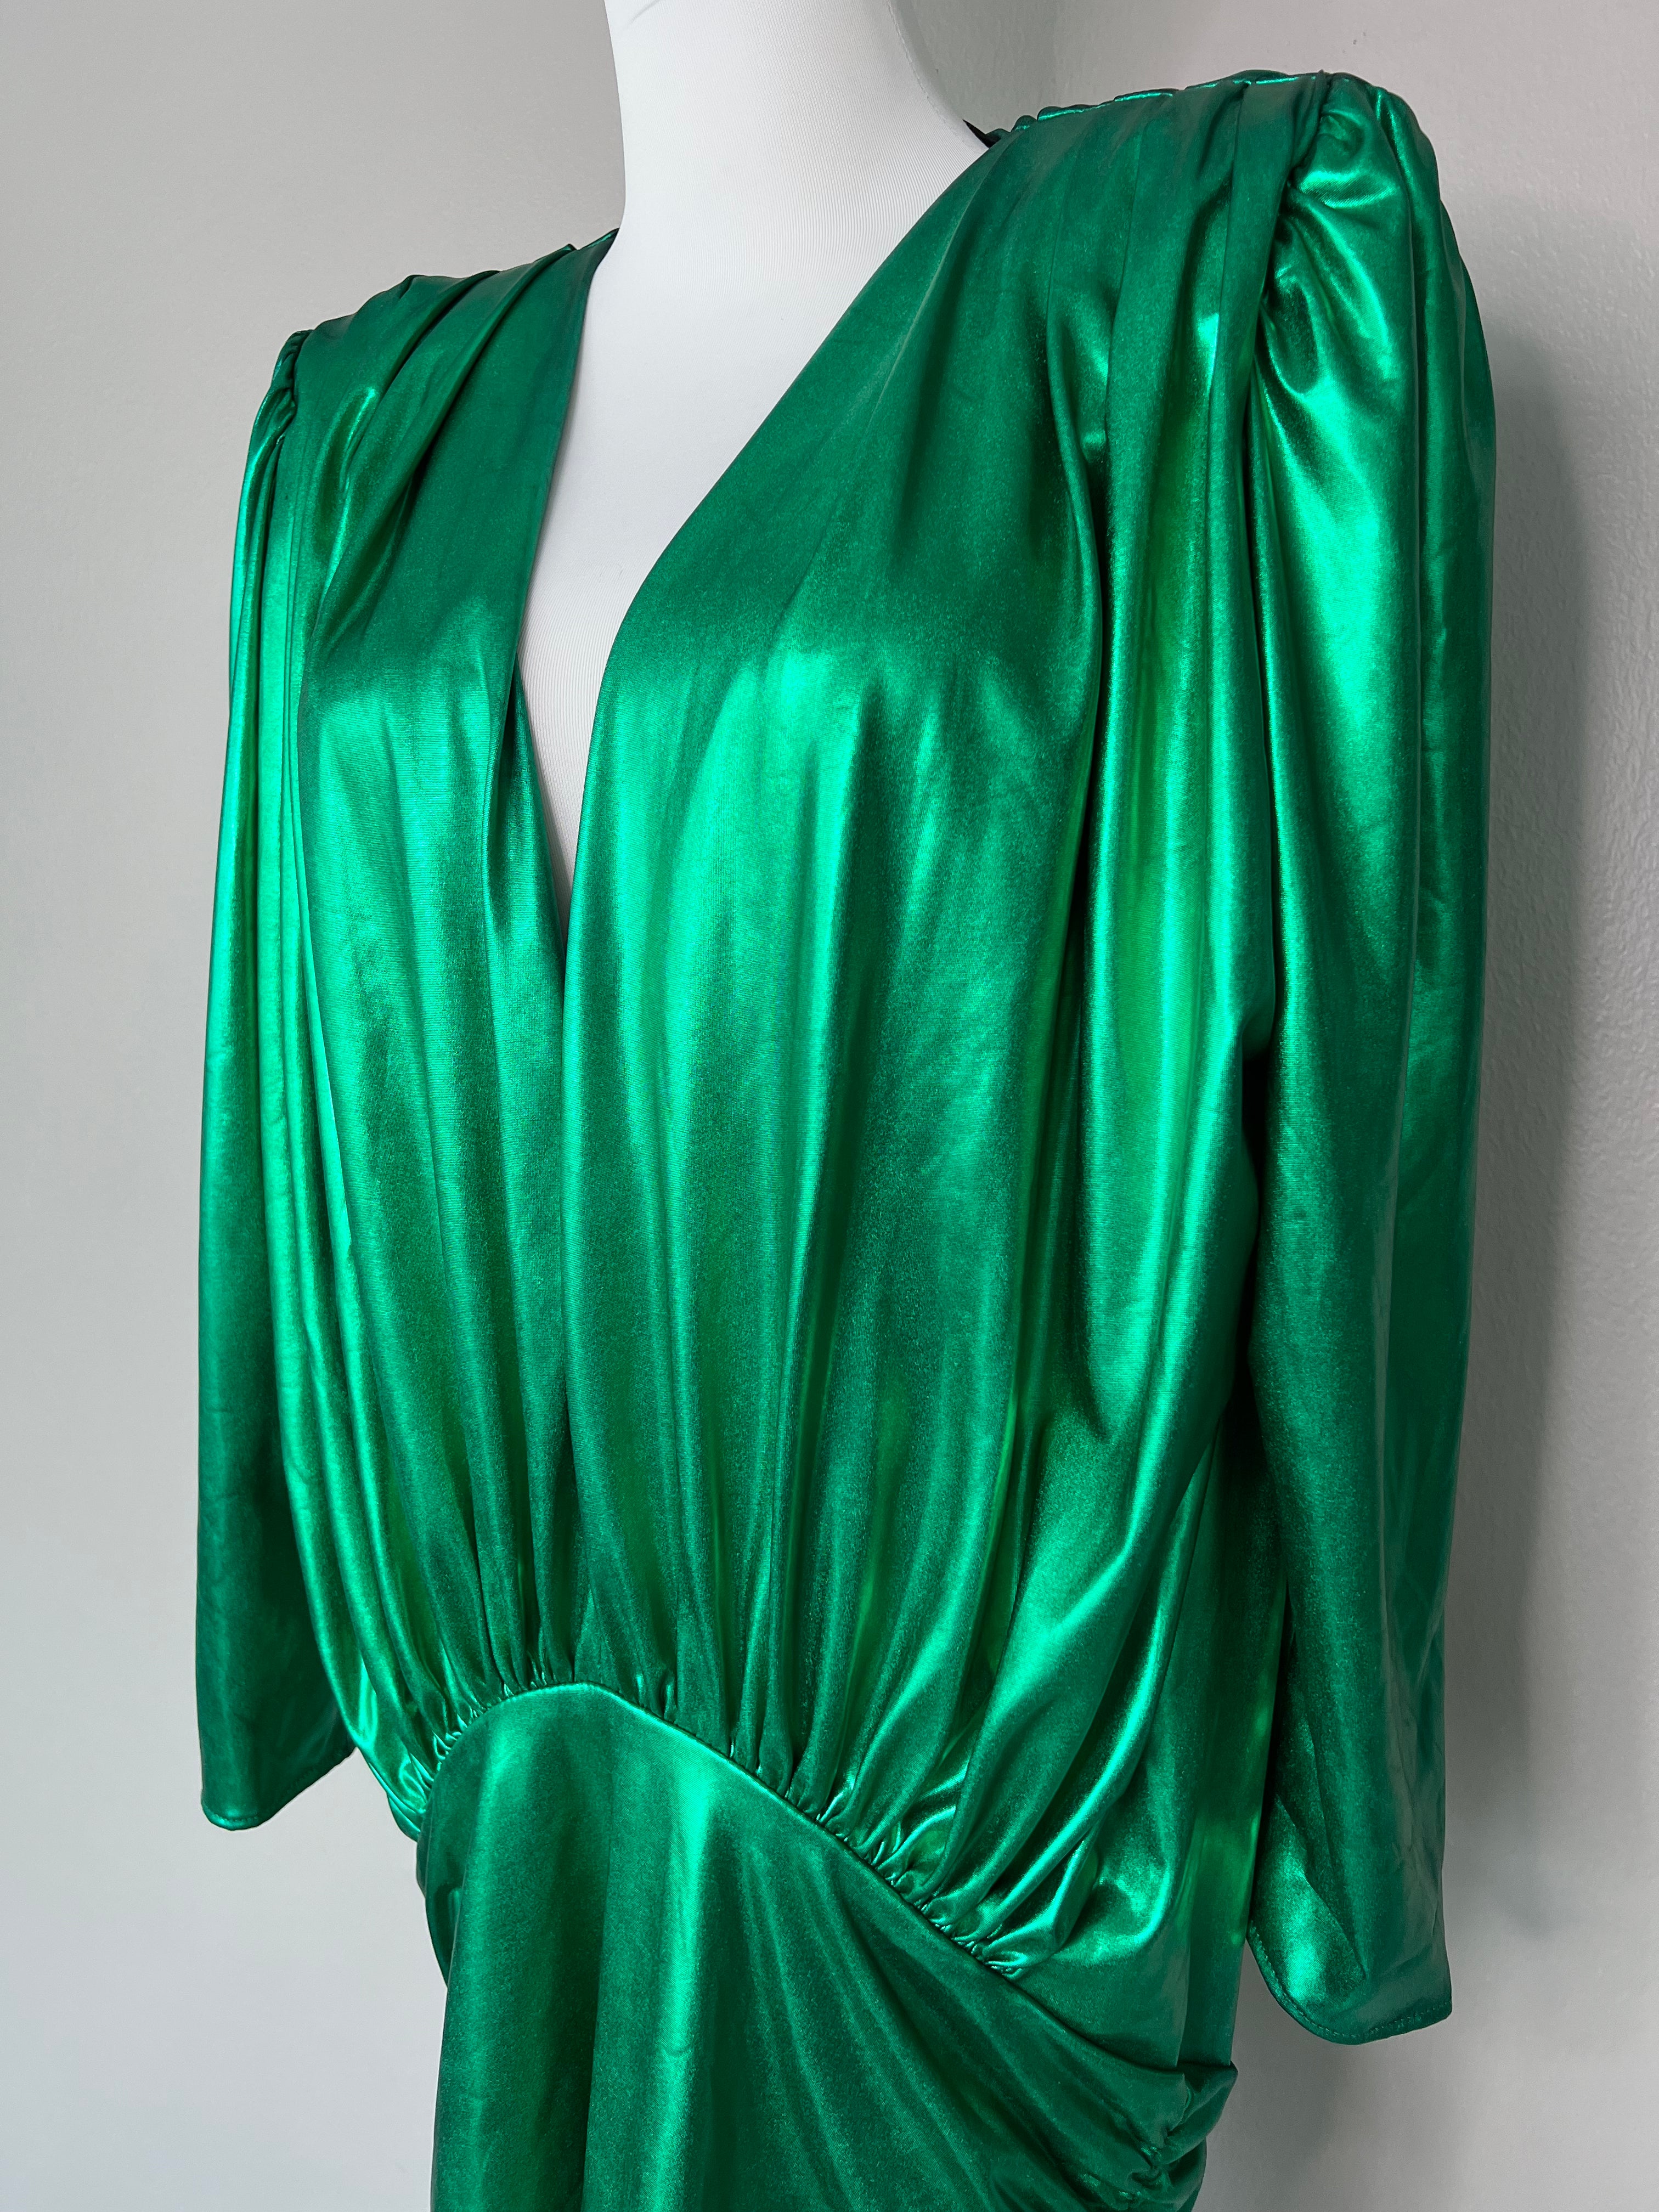 Metallic green Plunging neckline top - THE ATTICO